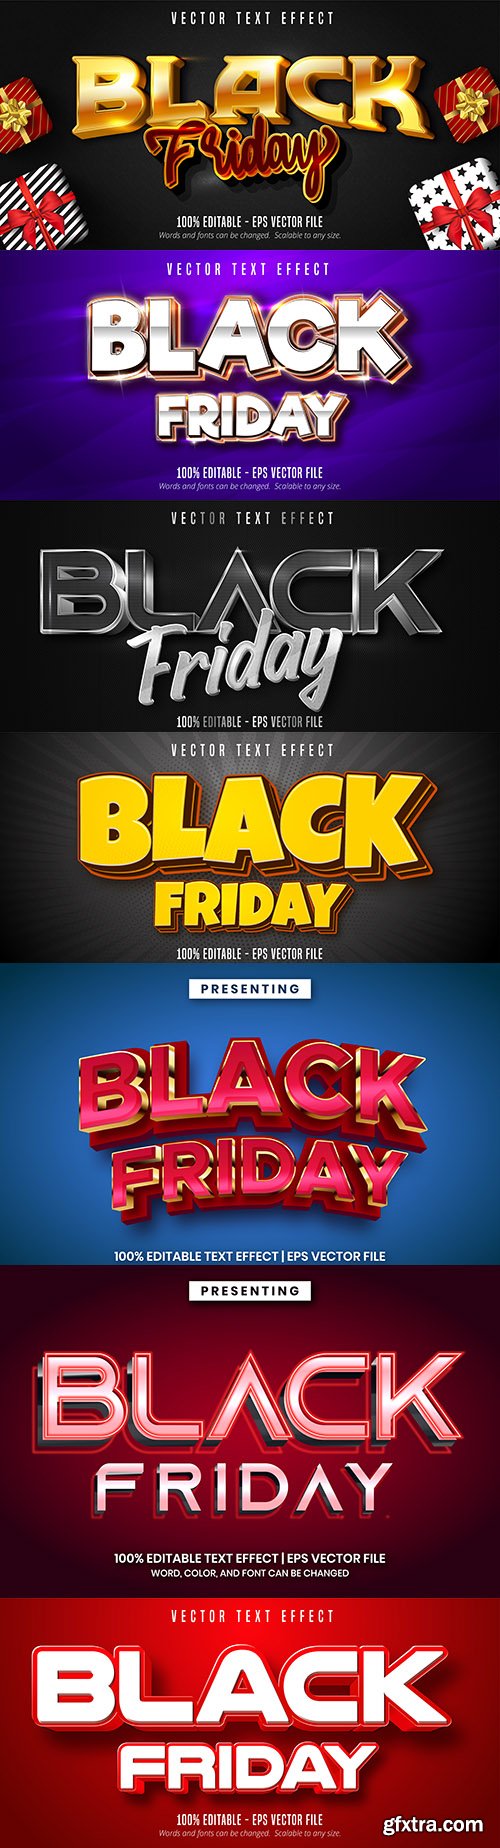 Black Friday Editable font effect text illustration design